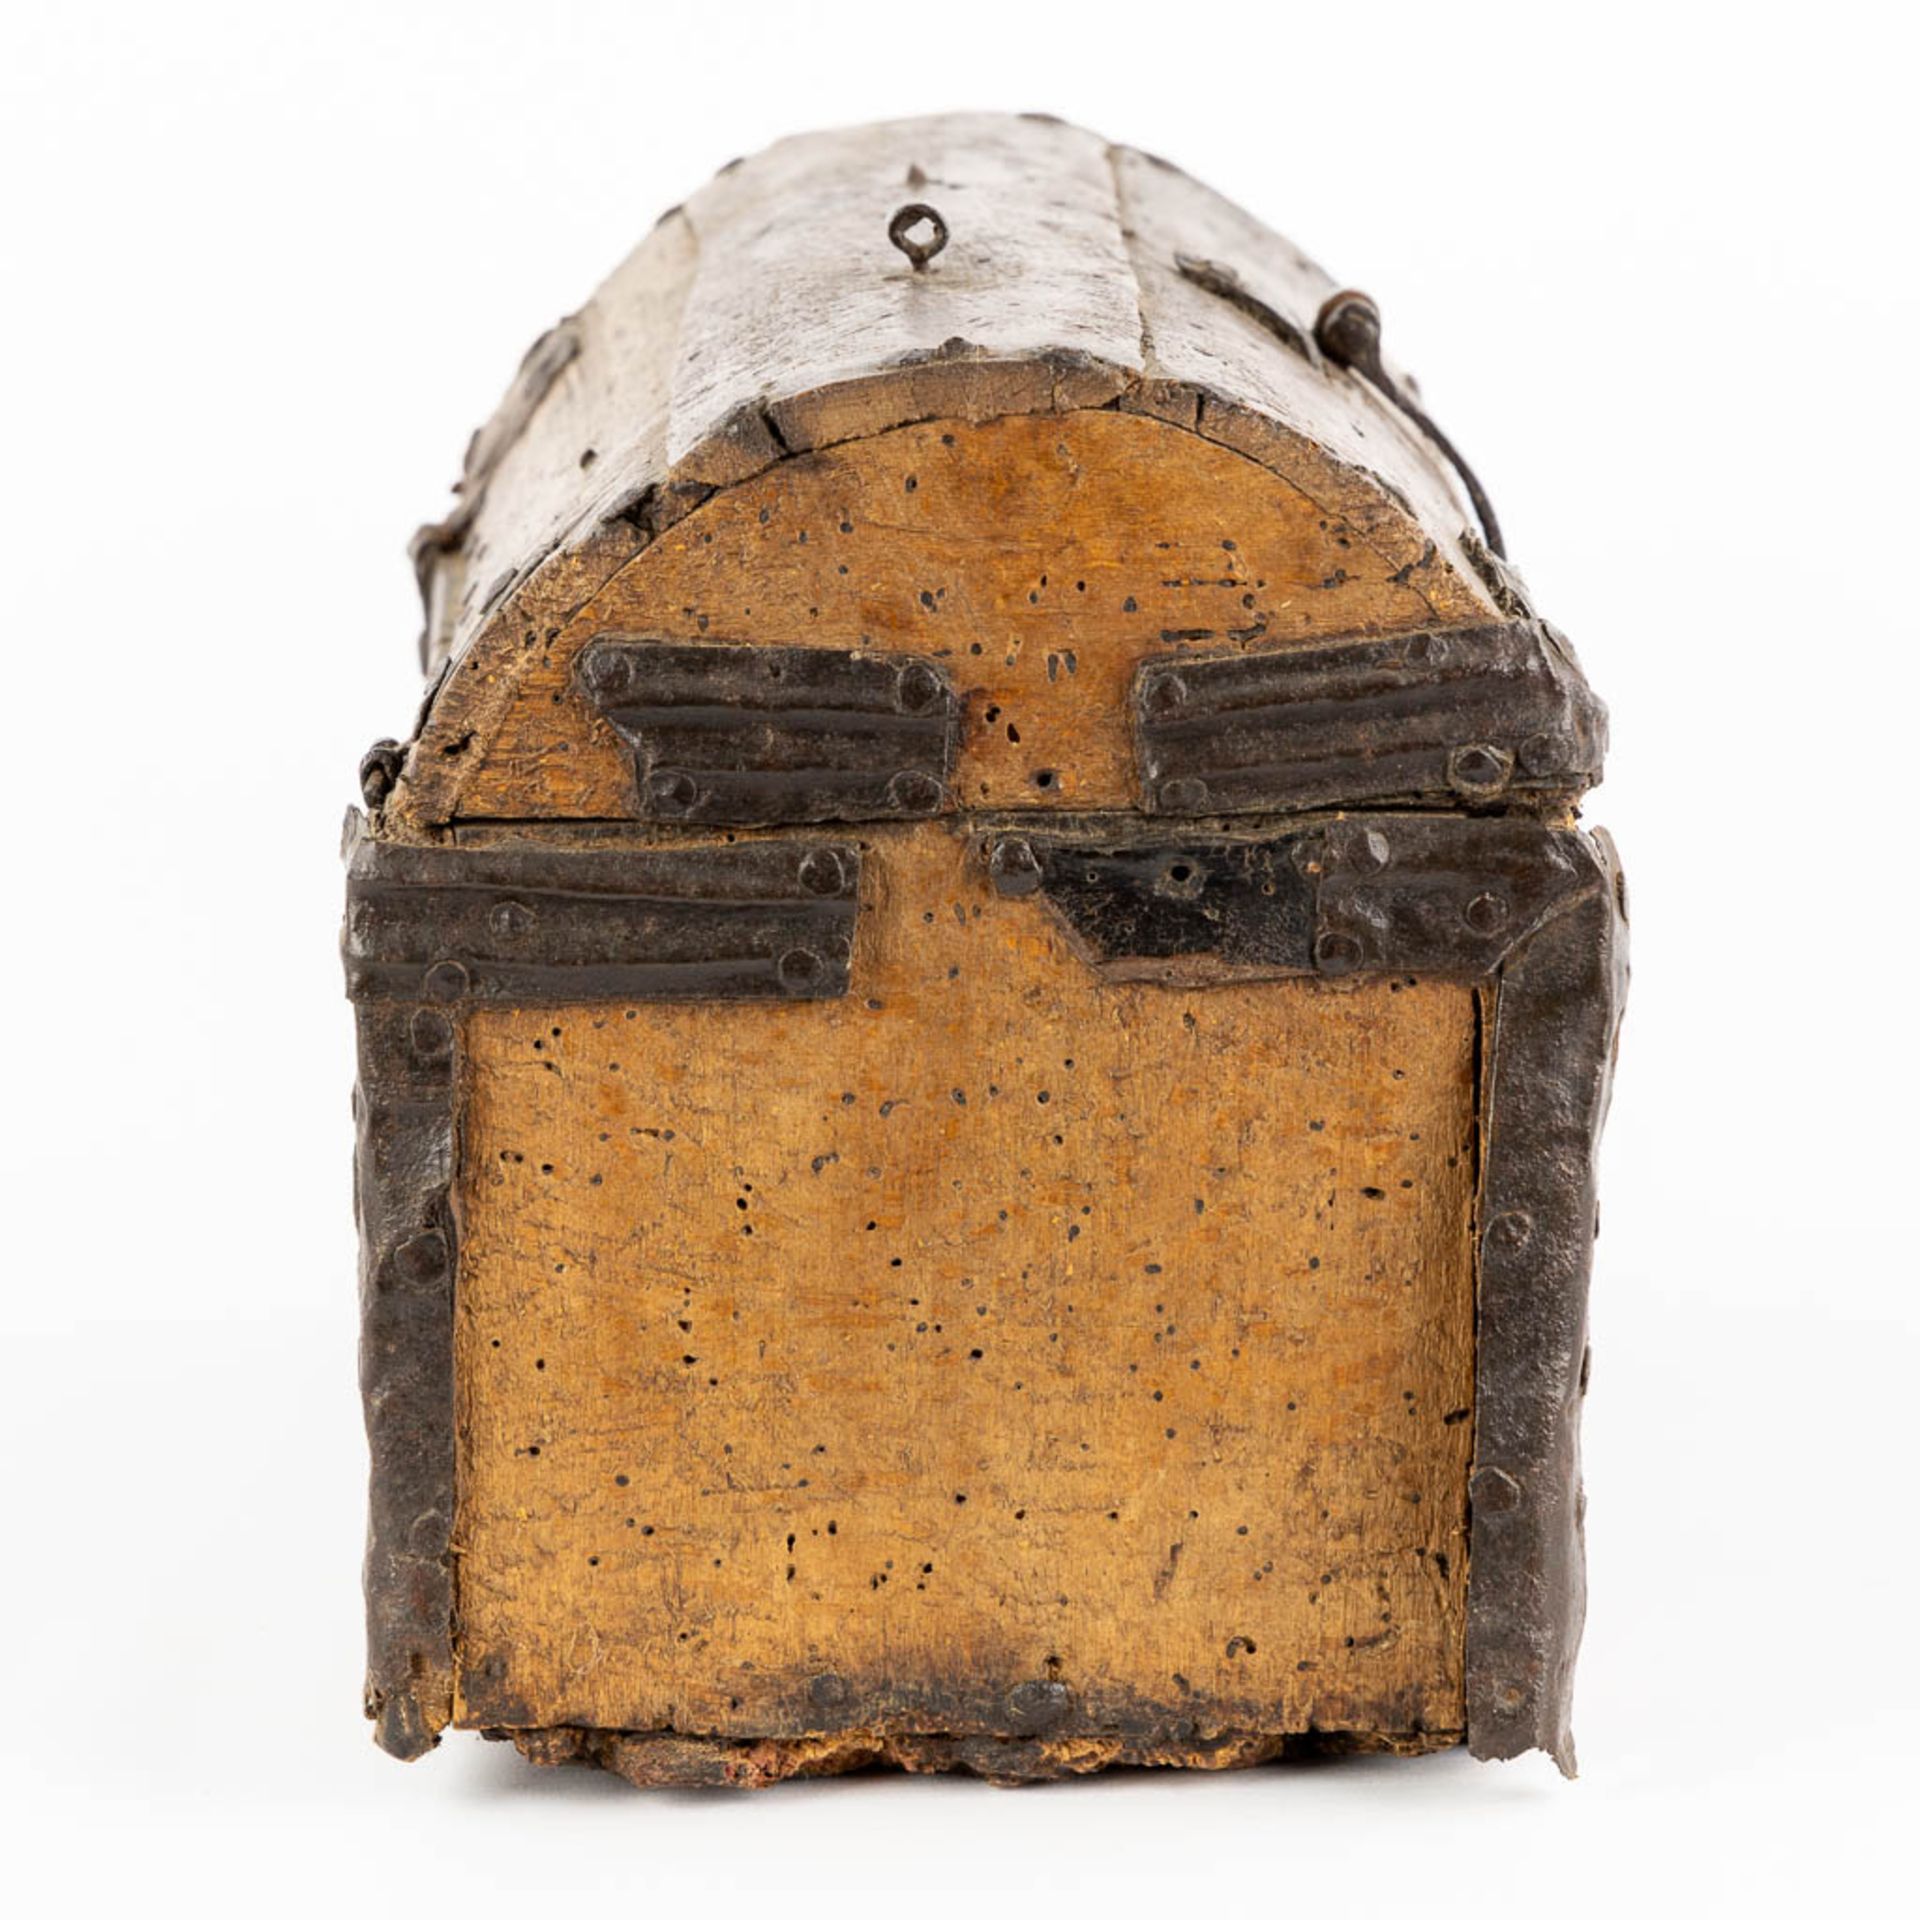 An antique money box or storage chest, wood and wrought iron, 16th/17th C. (L:20 x W:36 x H:22 cm) - Bild 6 aus 14